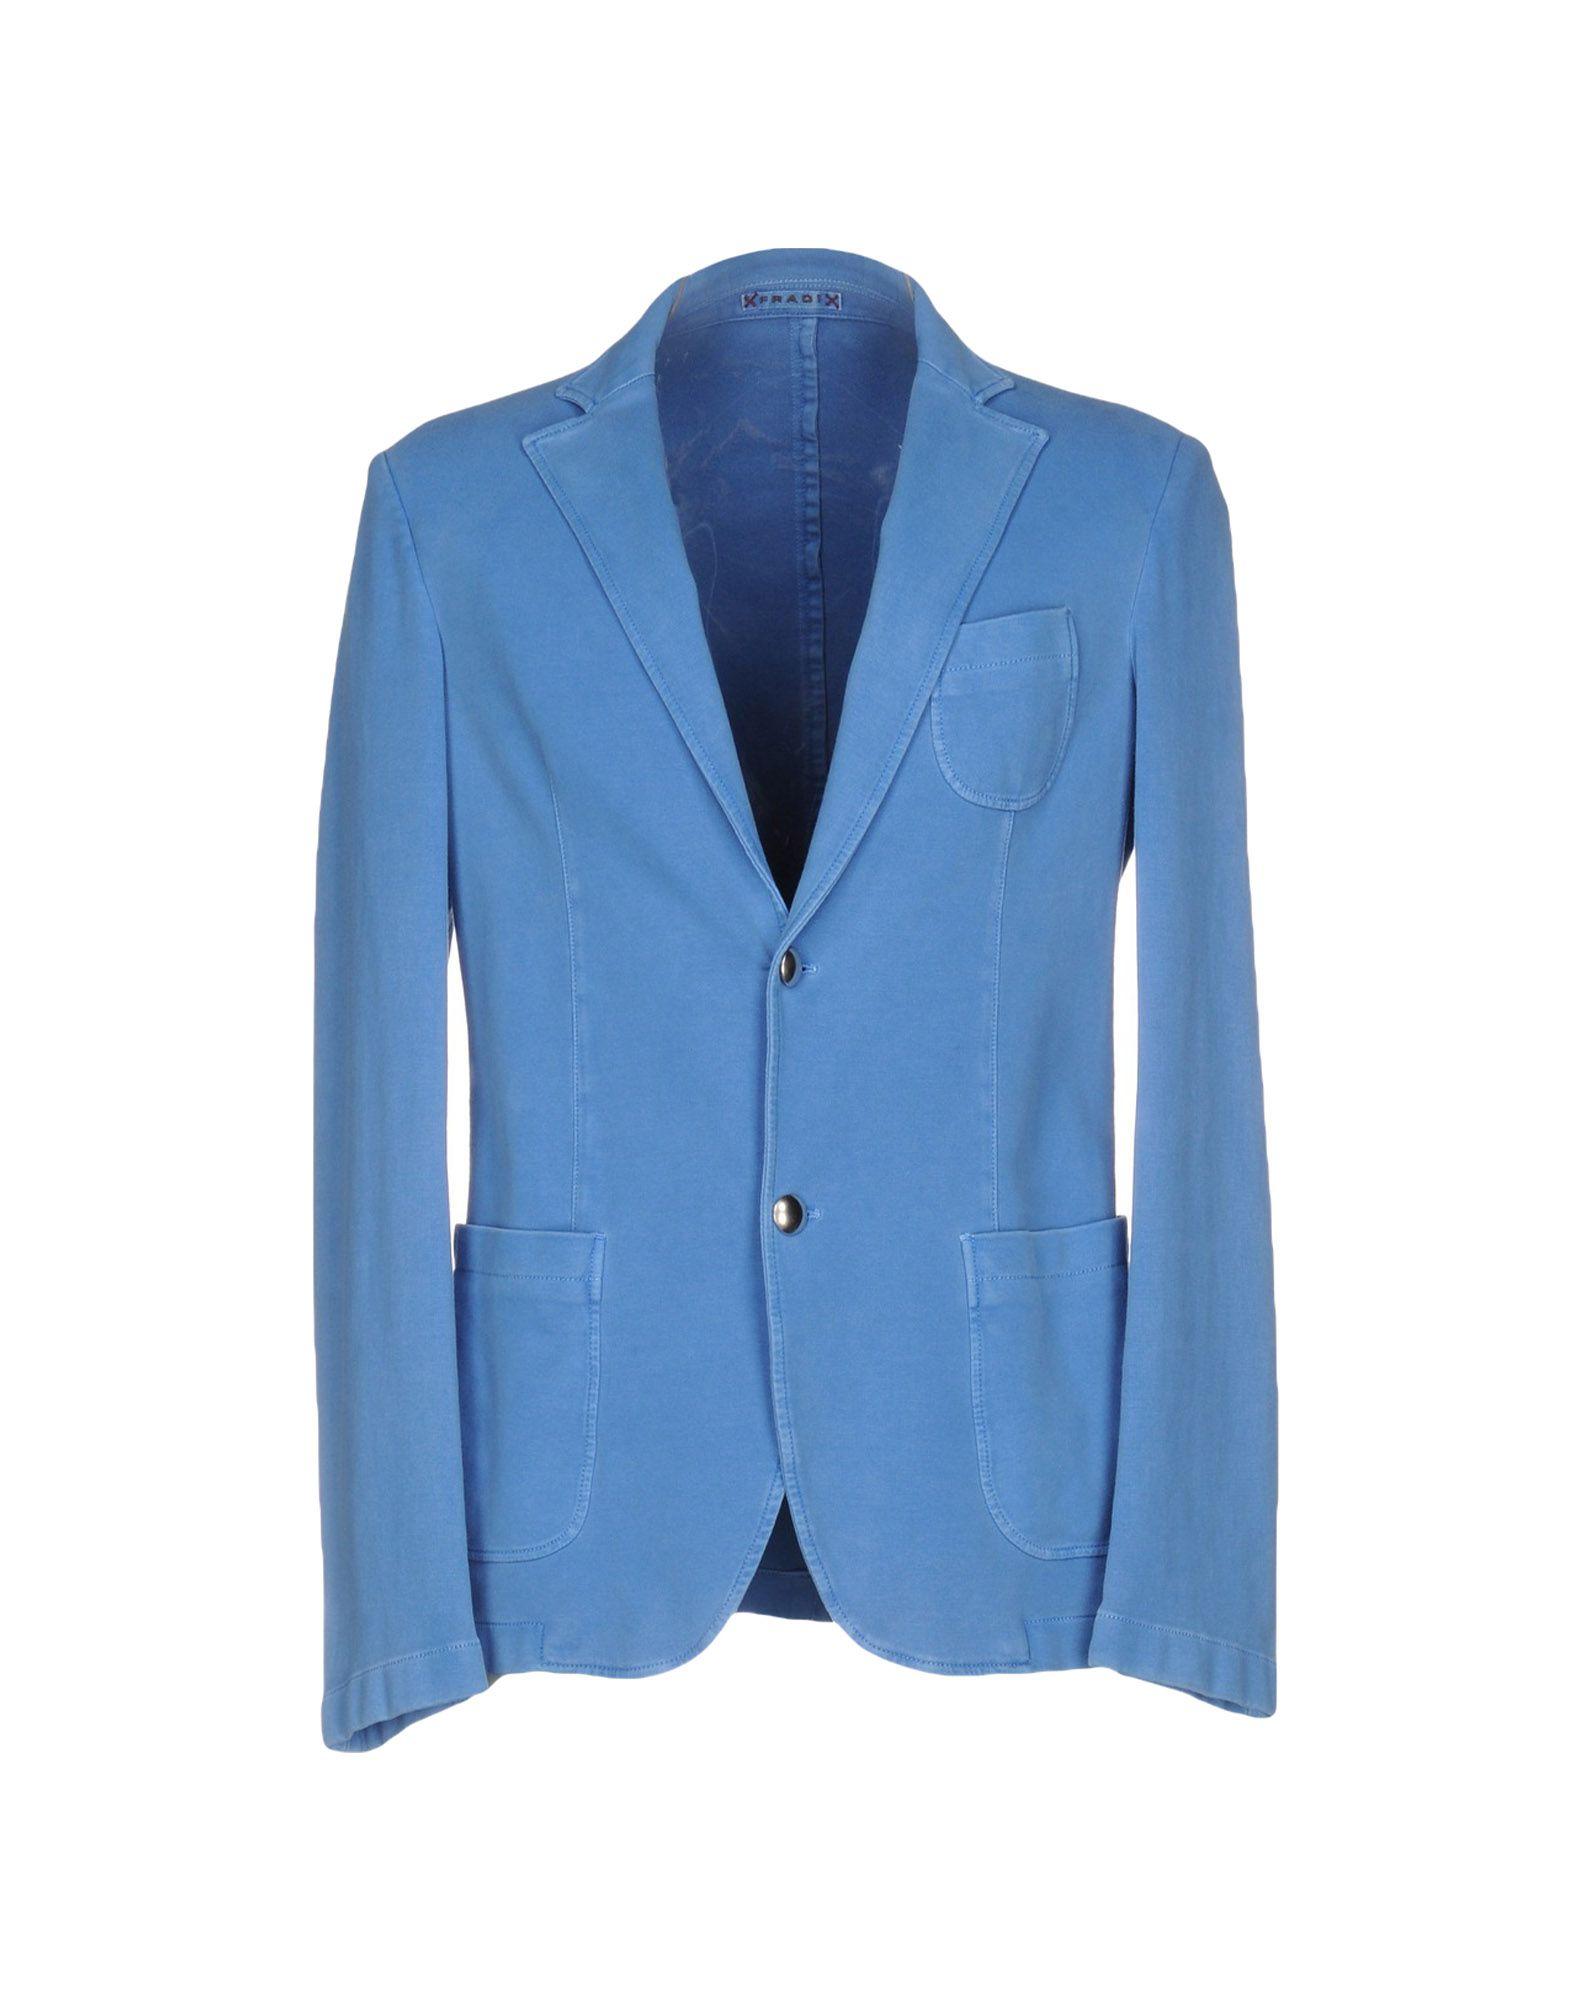 Fradi Cotton Blazer in Pastel Blue (Blue) for Men - Lyst